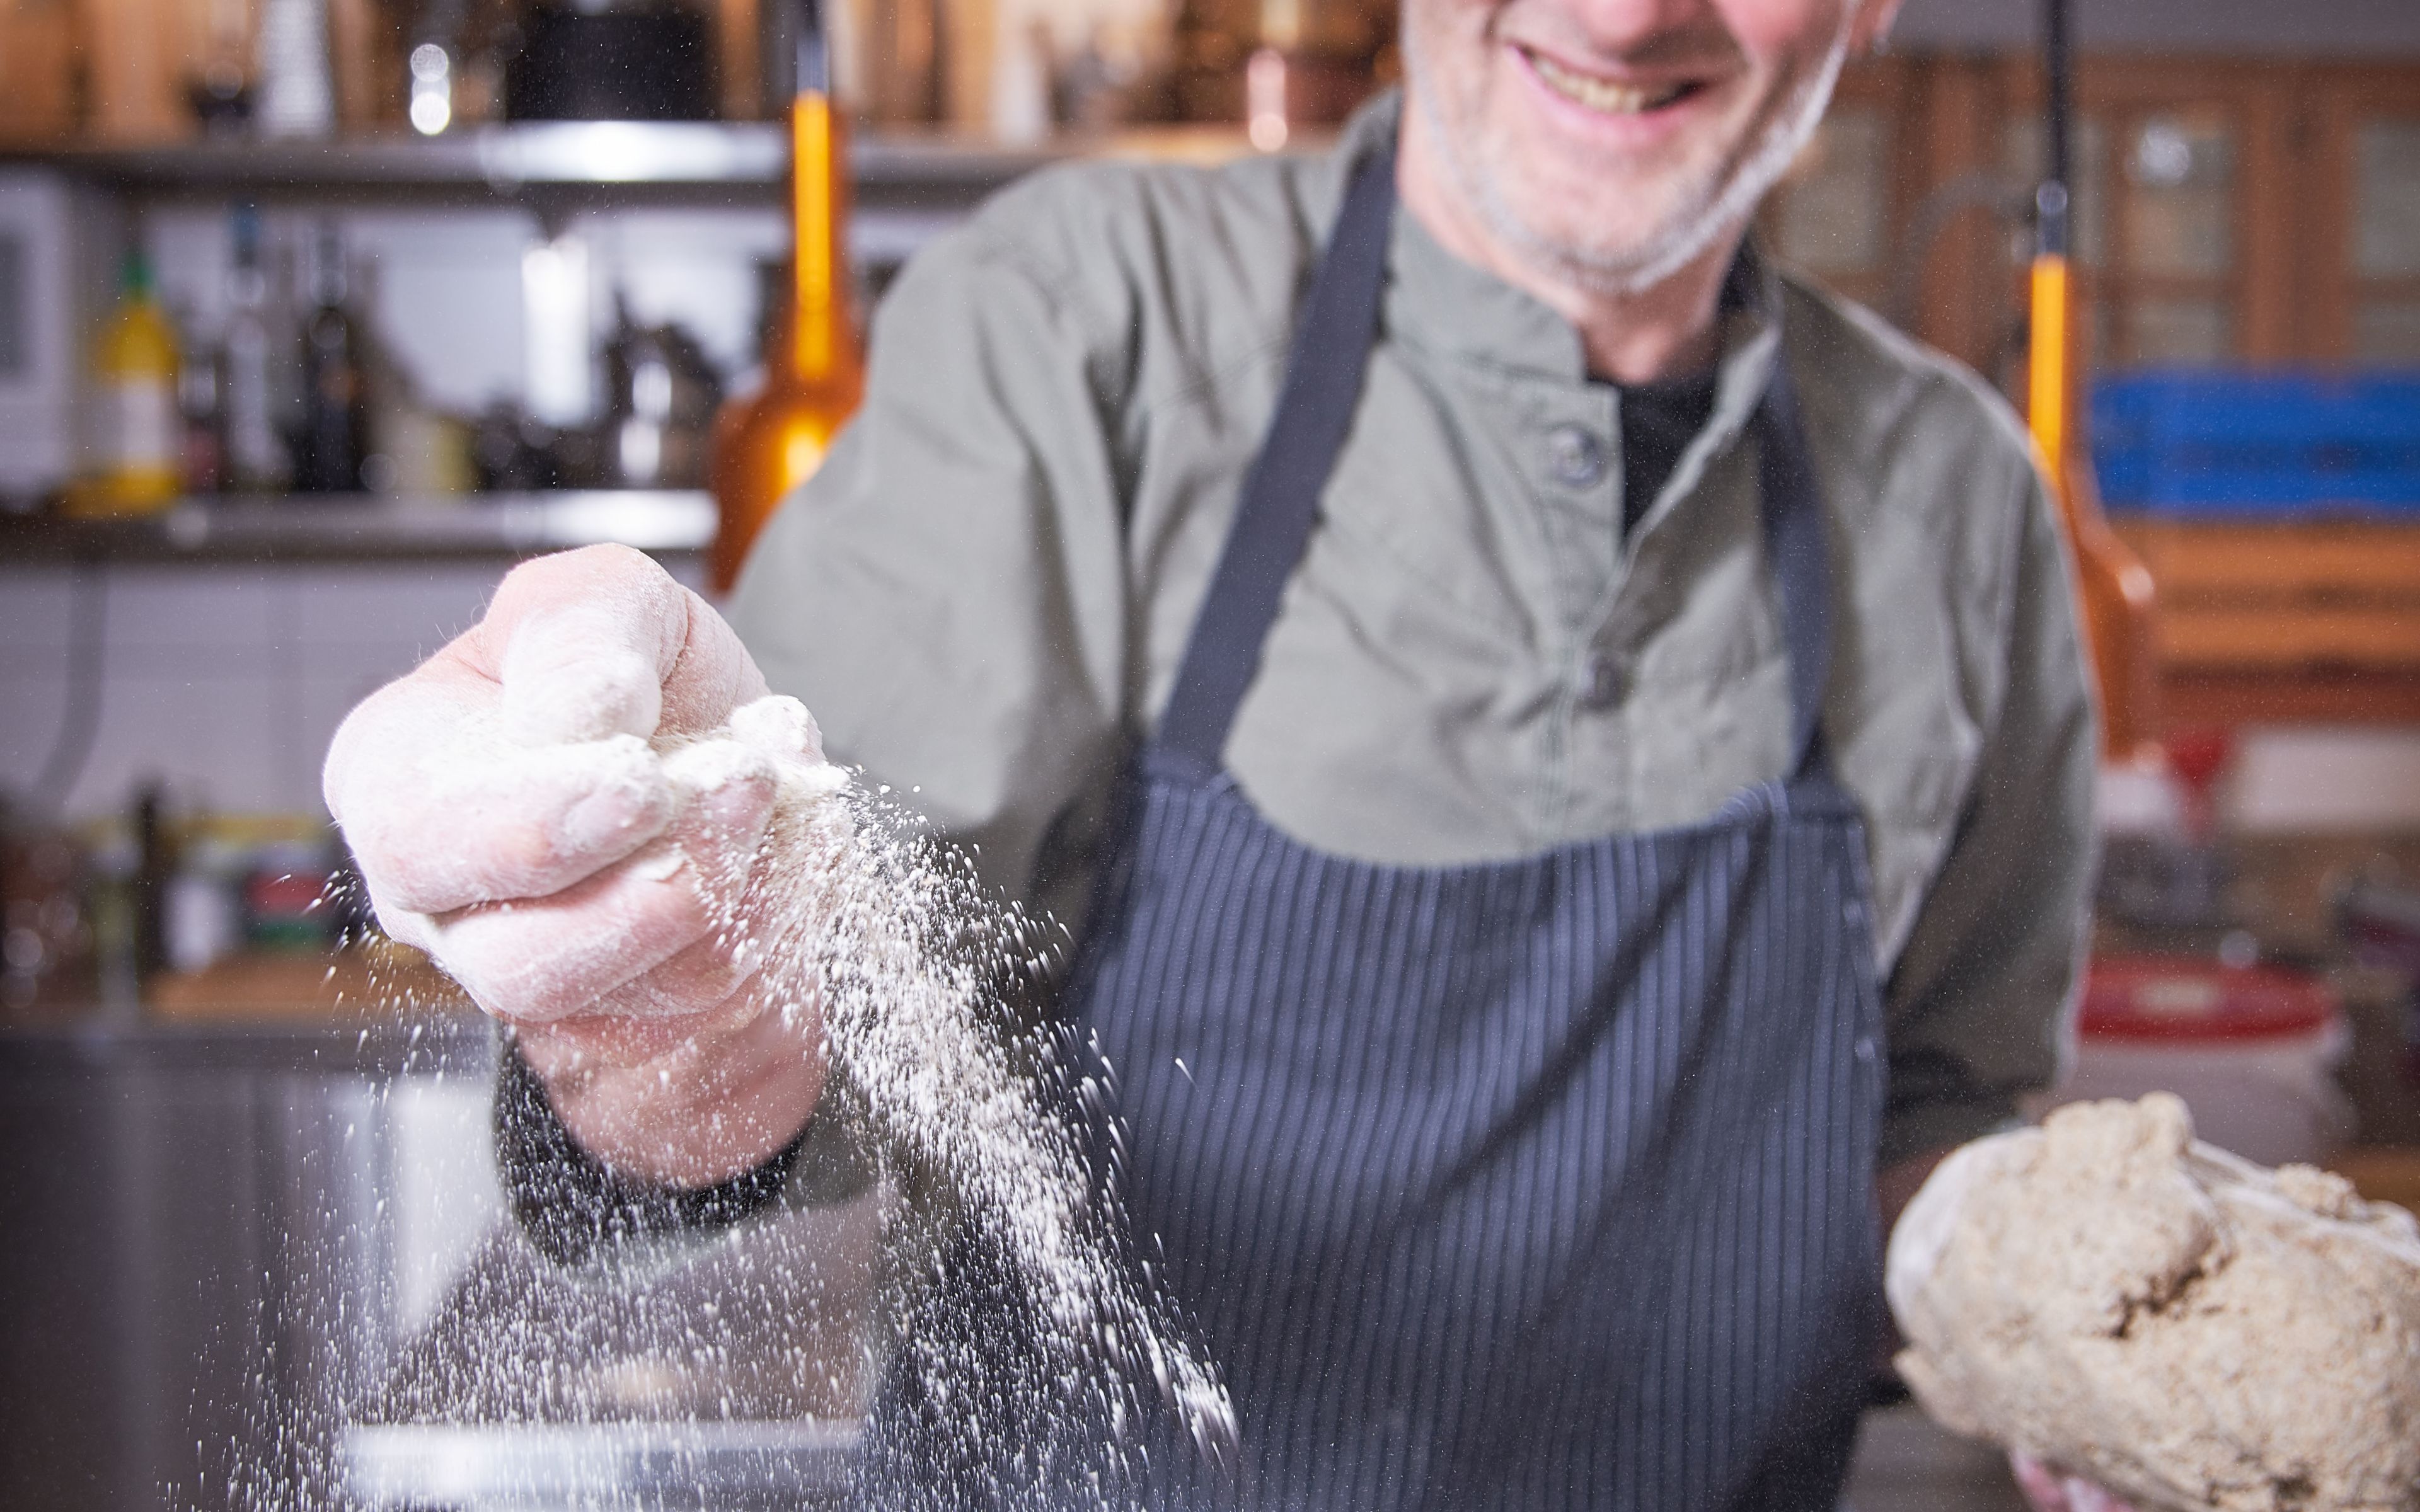 Klaus Leuenberger at work with dough and flour, Valais, Switzerland